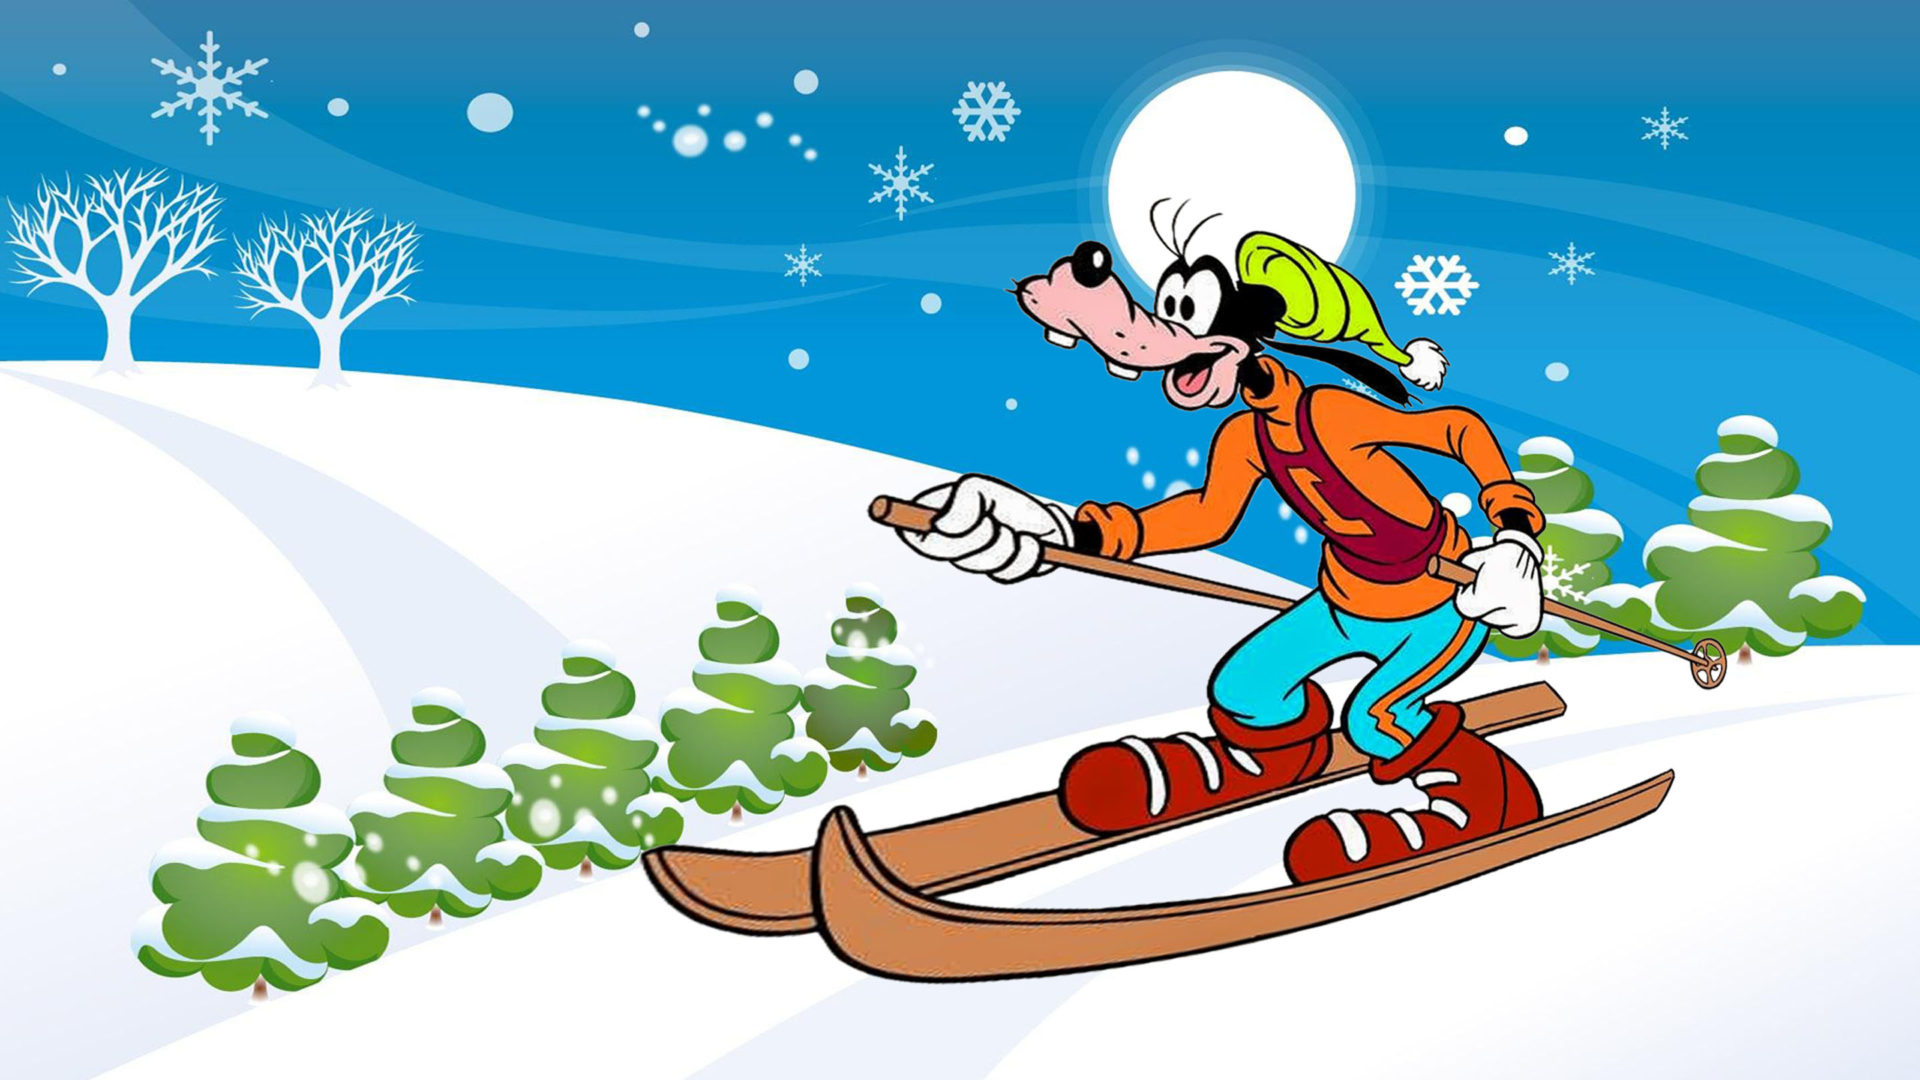 Walt Disney Cartoon Goofy Skiing Path Winter Mountain Snow Desktop HD Wallpaper For Mobile Phones And Computer 2880x1620, Wallpaper13.com